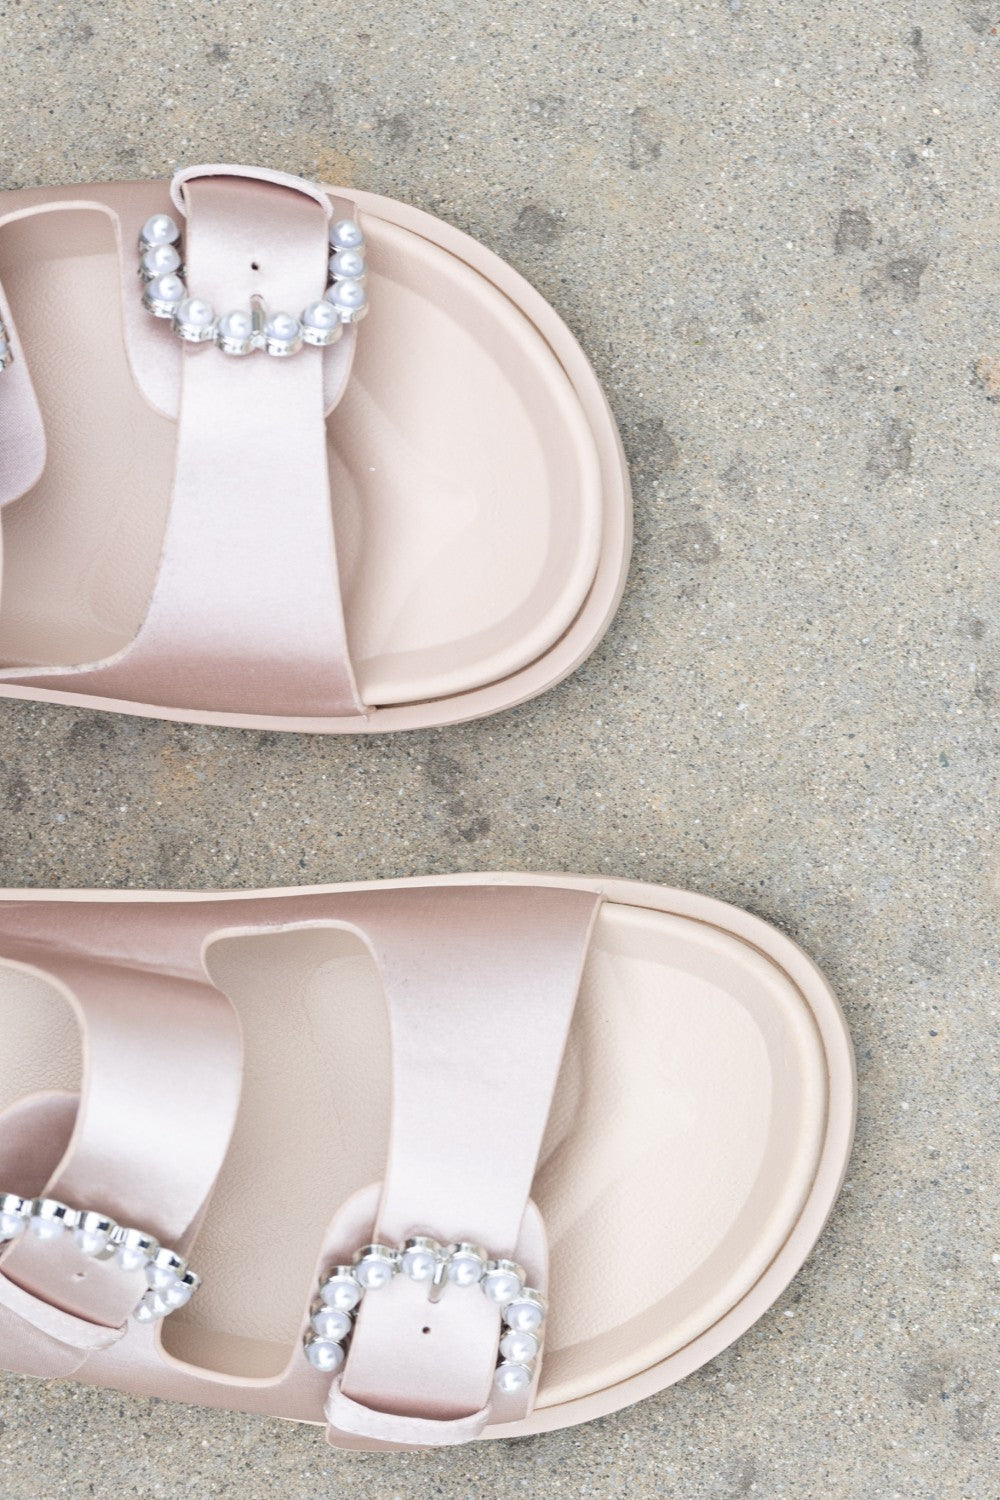 Weeboo Jewel of the Sea Faux Pearl Buckle Slide Sandals